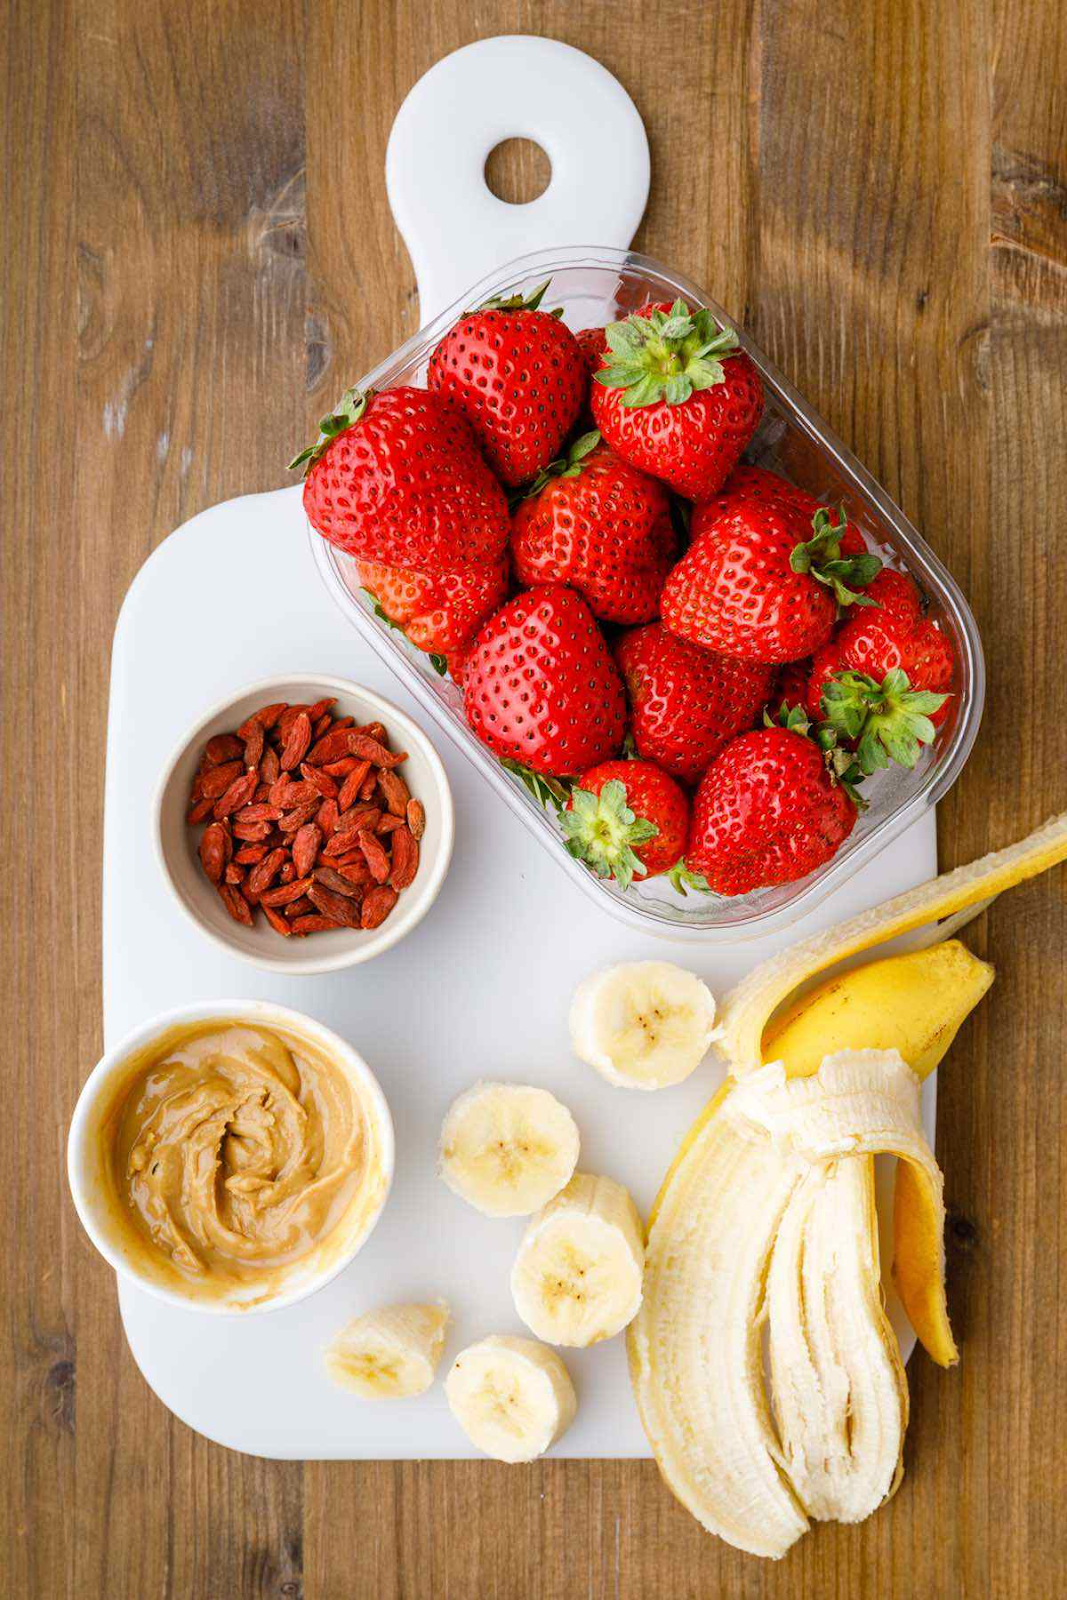 Classic strawberry banana smoothie